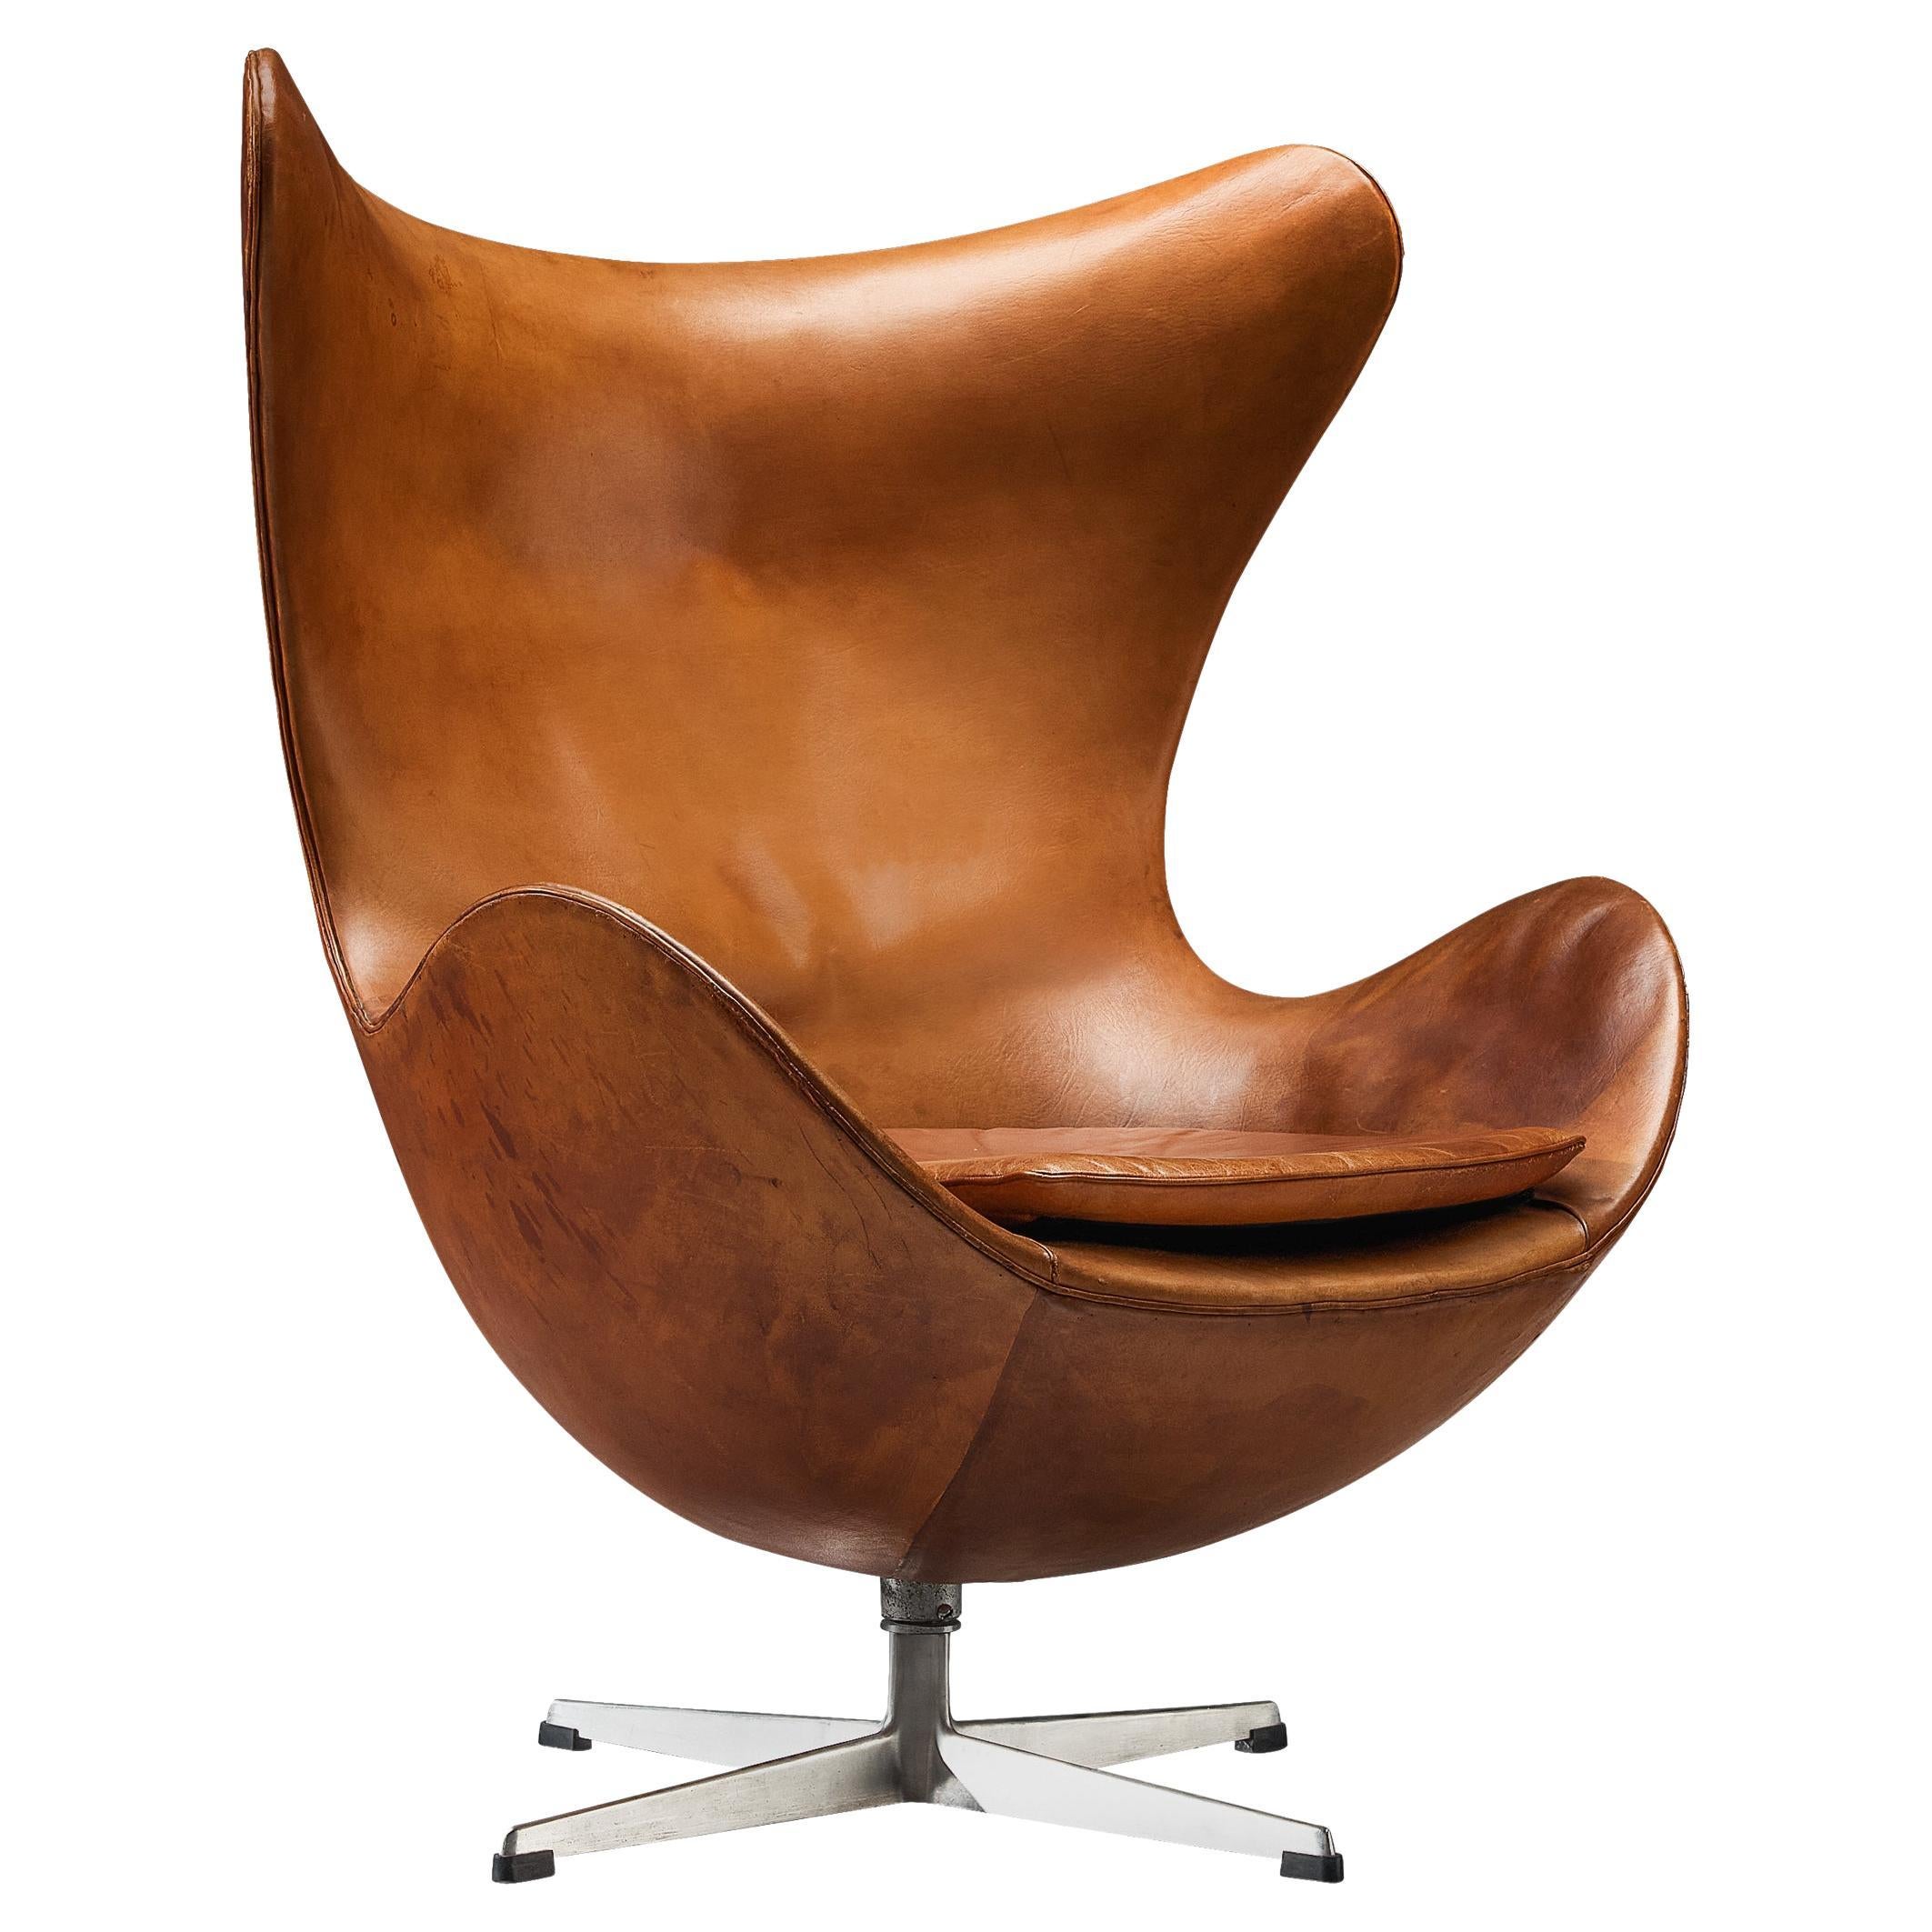 Arne Jacobsen for Fritz Hansen Early 'Egg' Lounge Chair in Cognac Leather